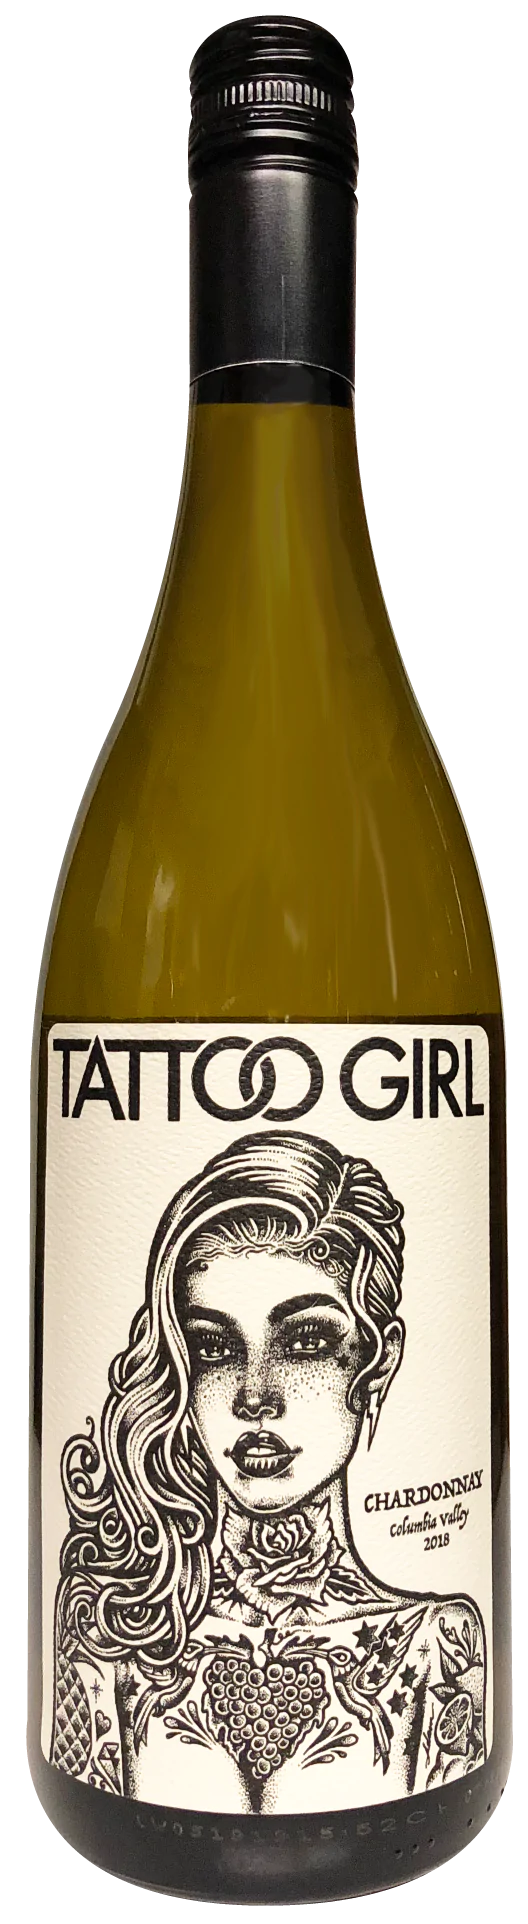 Tattoo Girl Chardonnay Columbia Valley